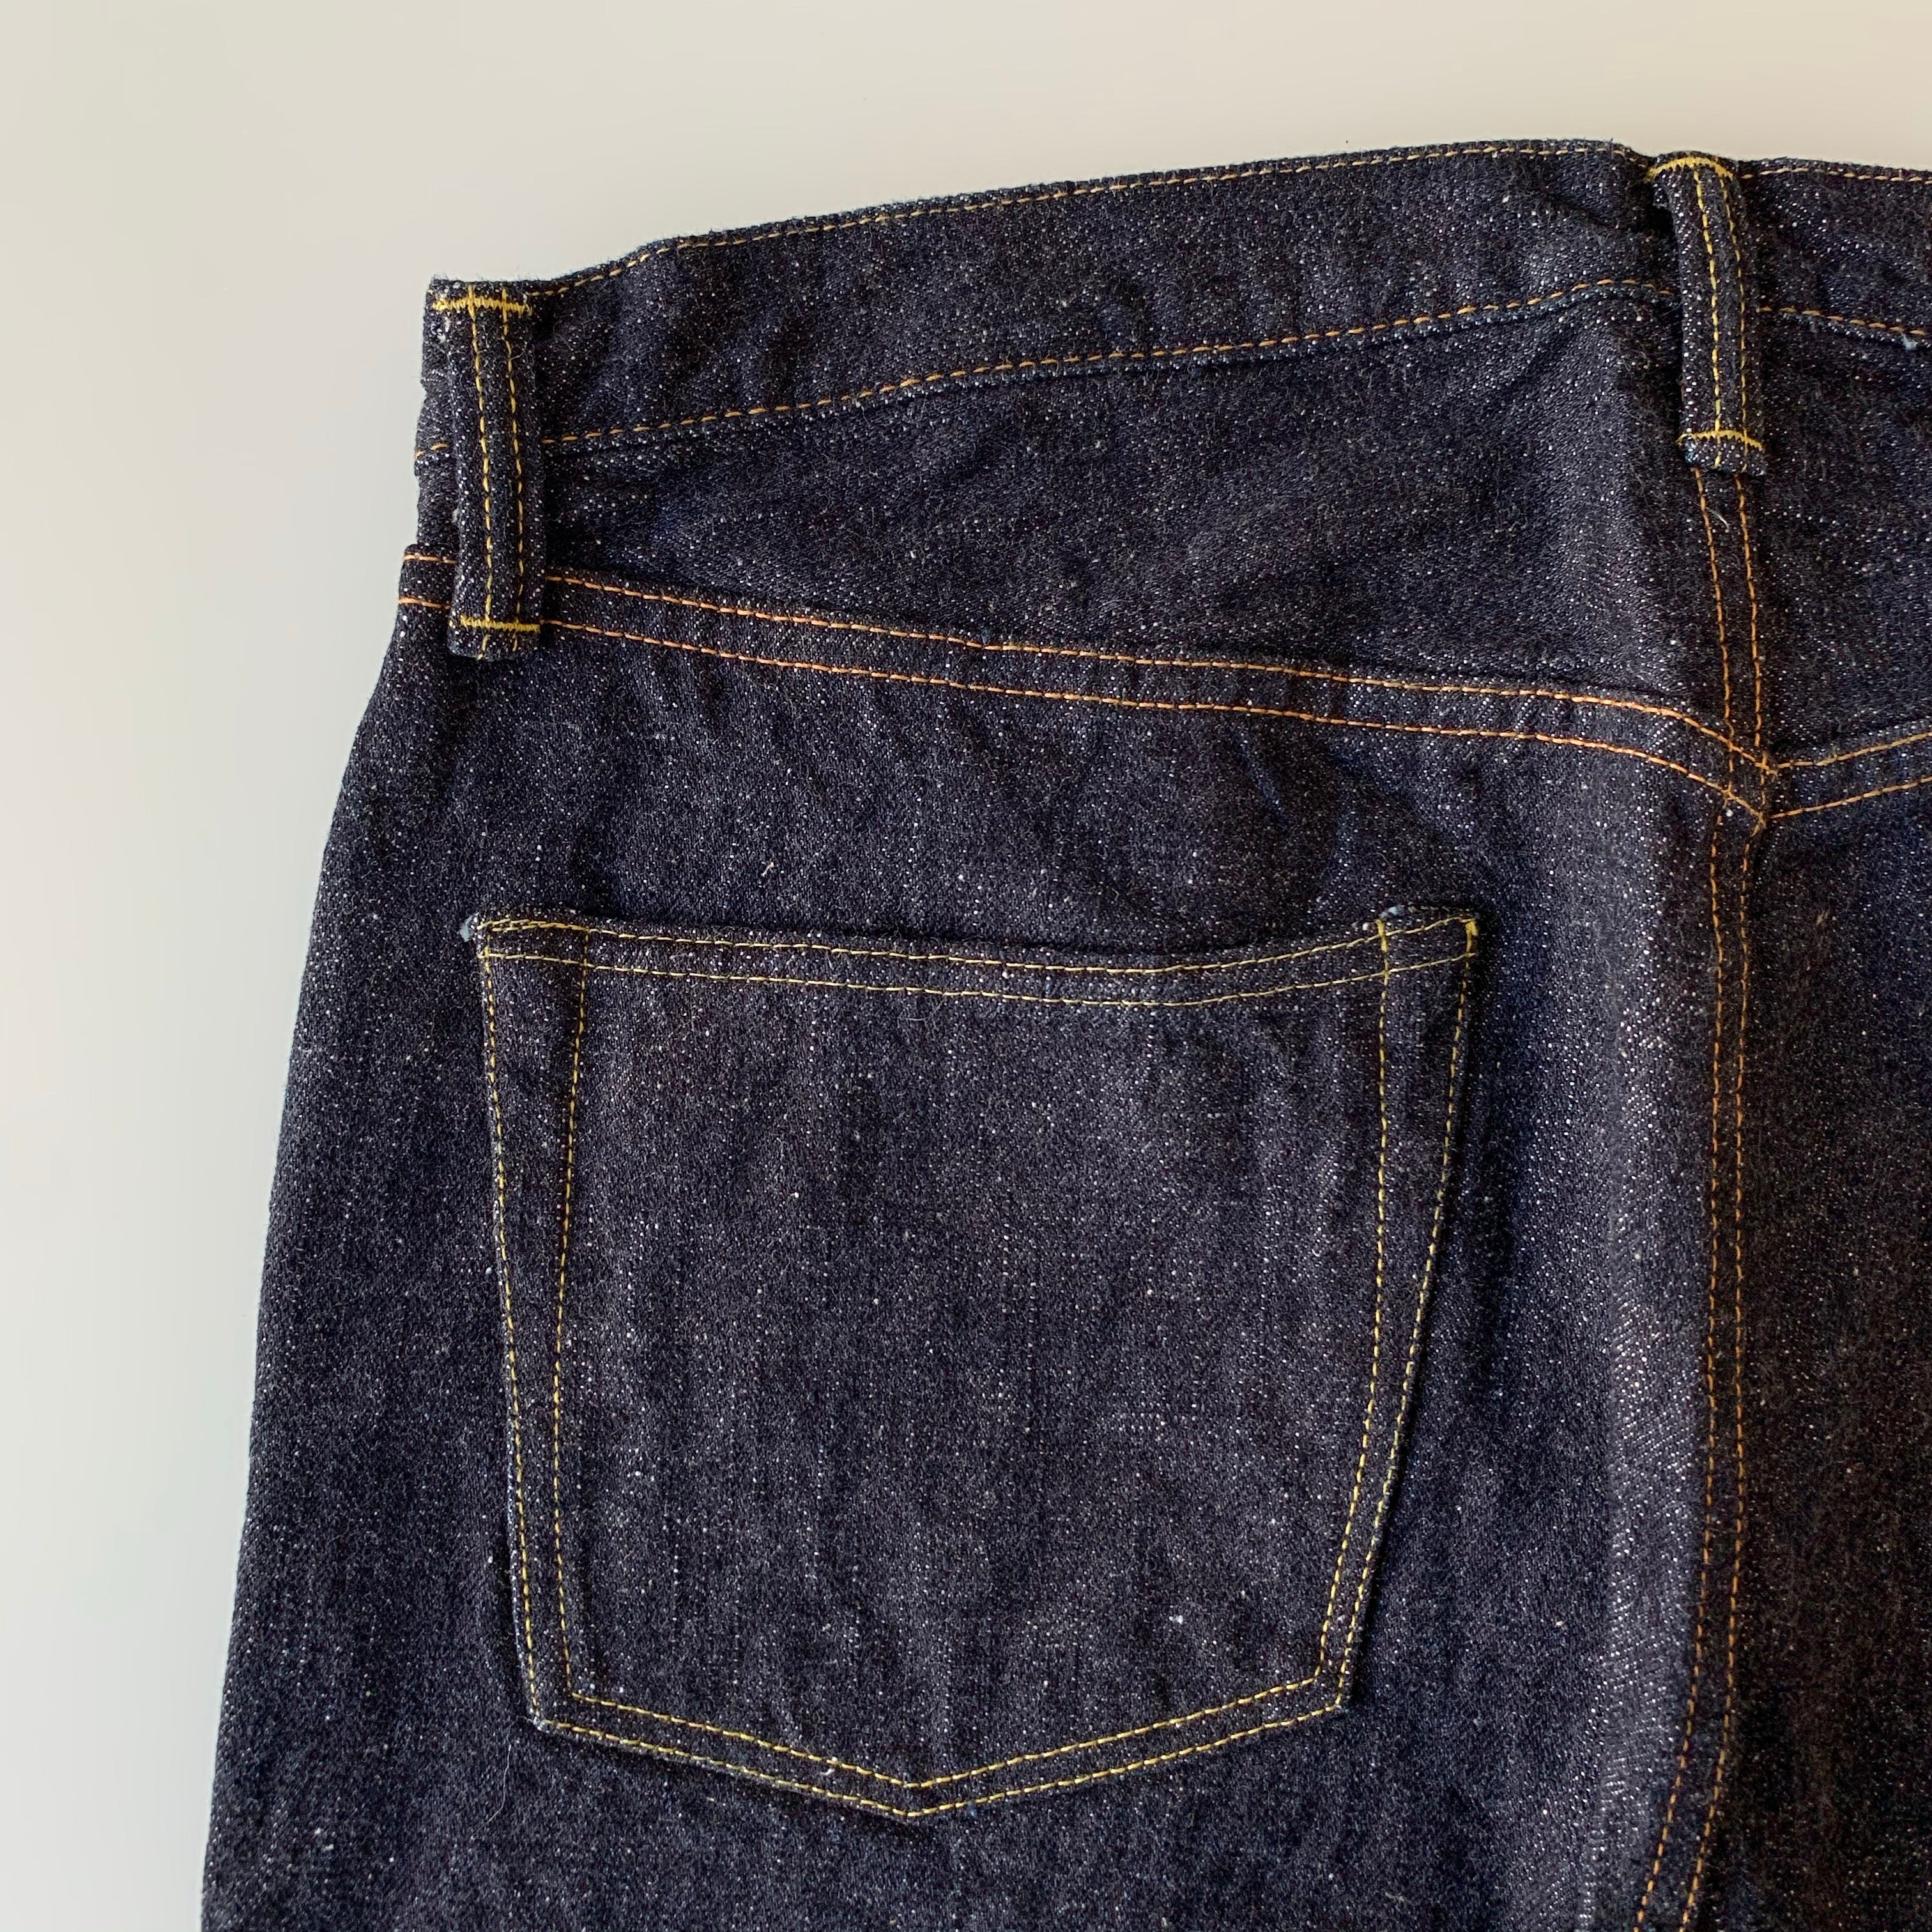 Ladies Regular Bottom Rough Denim Jeans at Rs 795/piece in Vadodara | ID:  21861793612